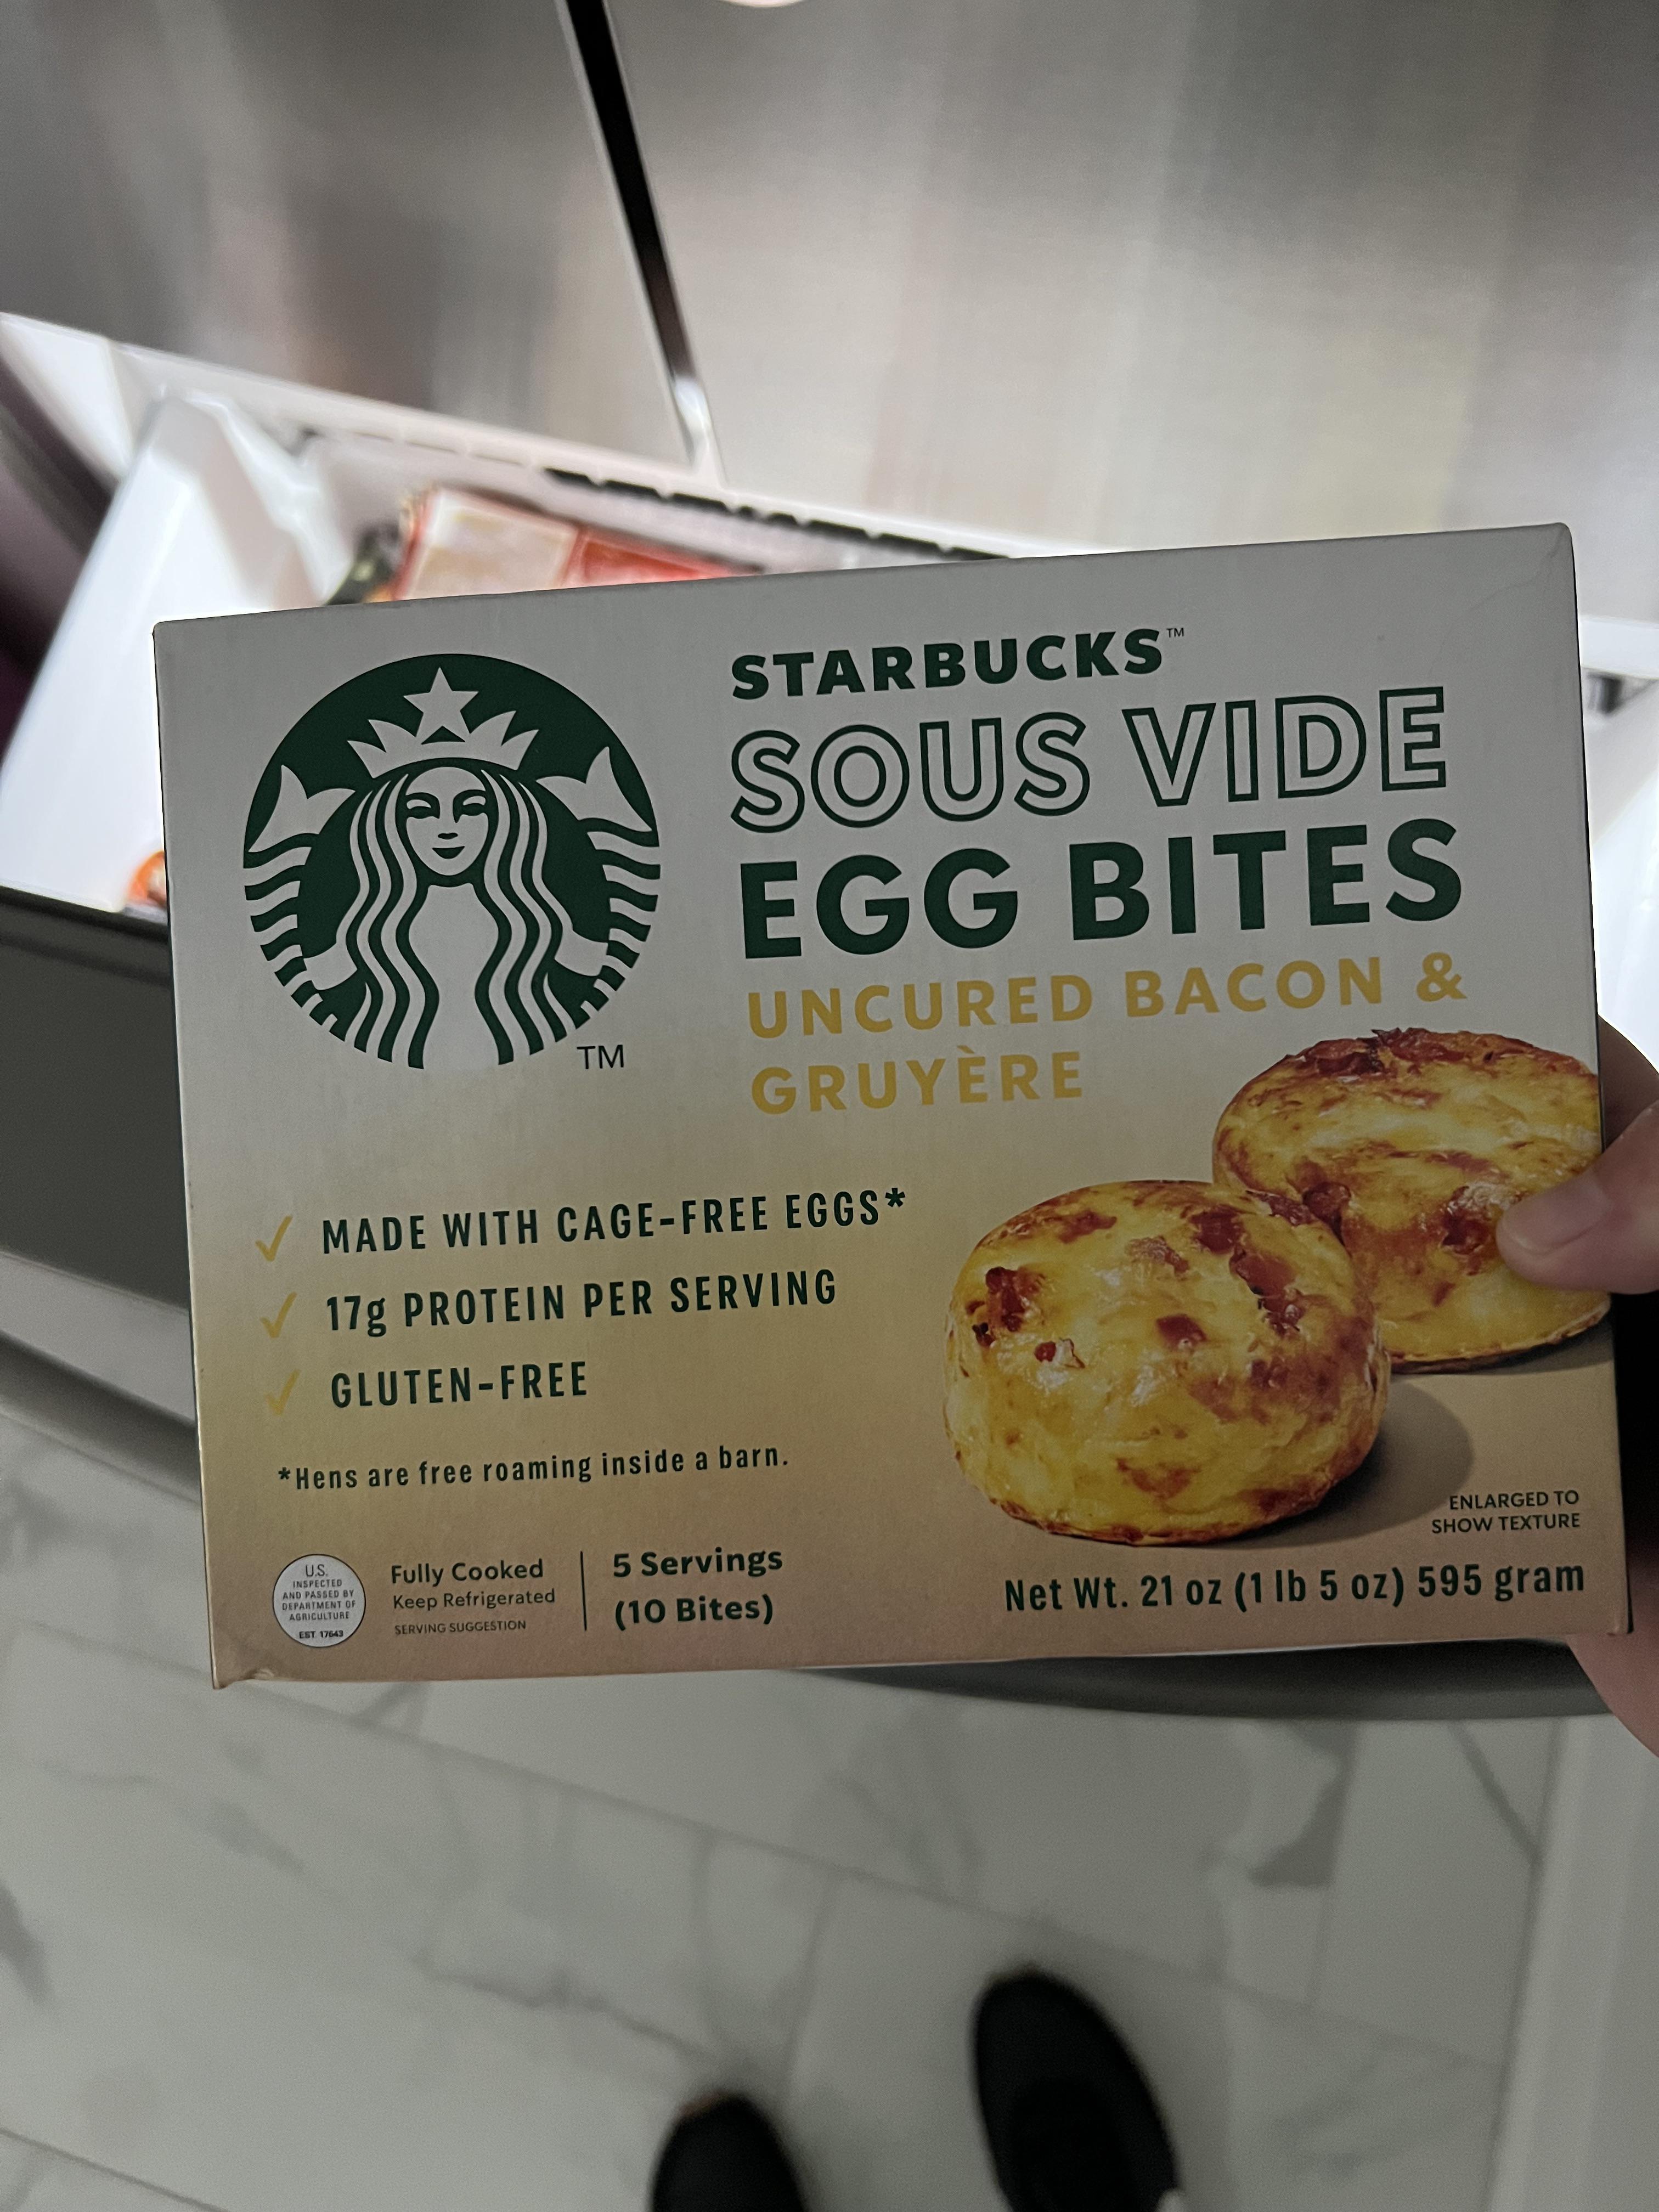 Are Starbucks Egg Bites Gluten Free? Dietary Considerations